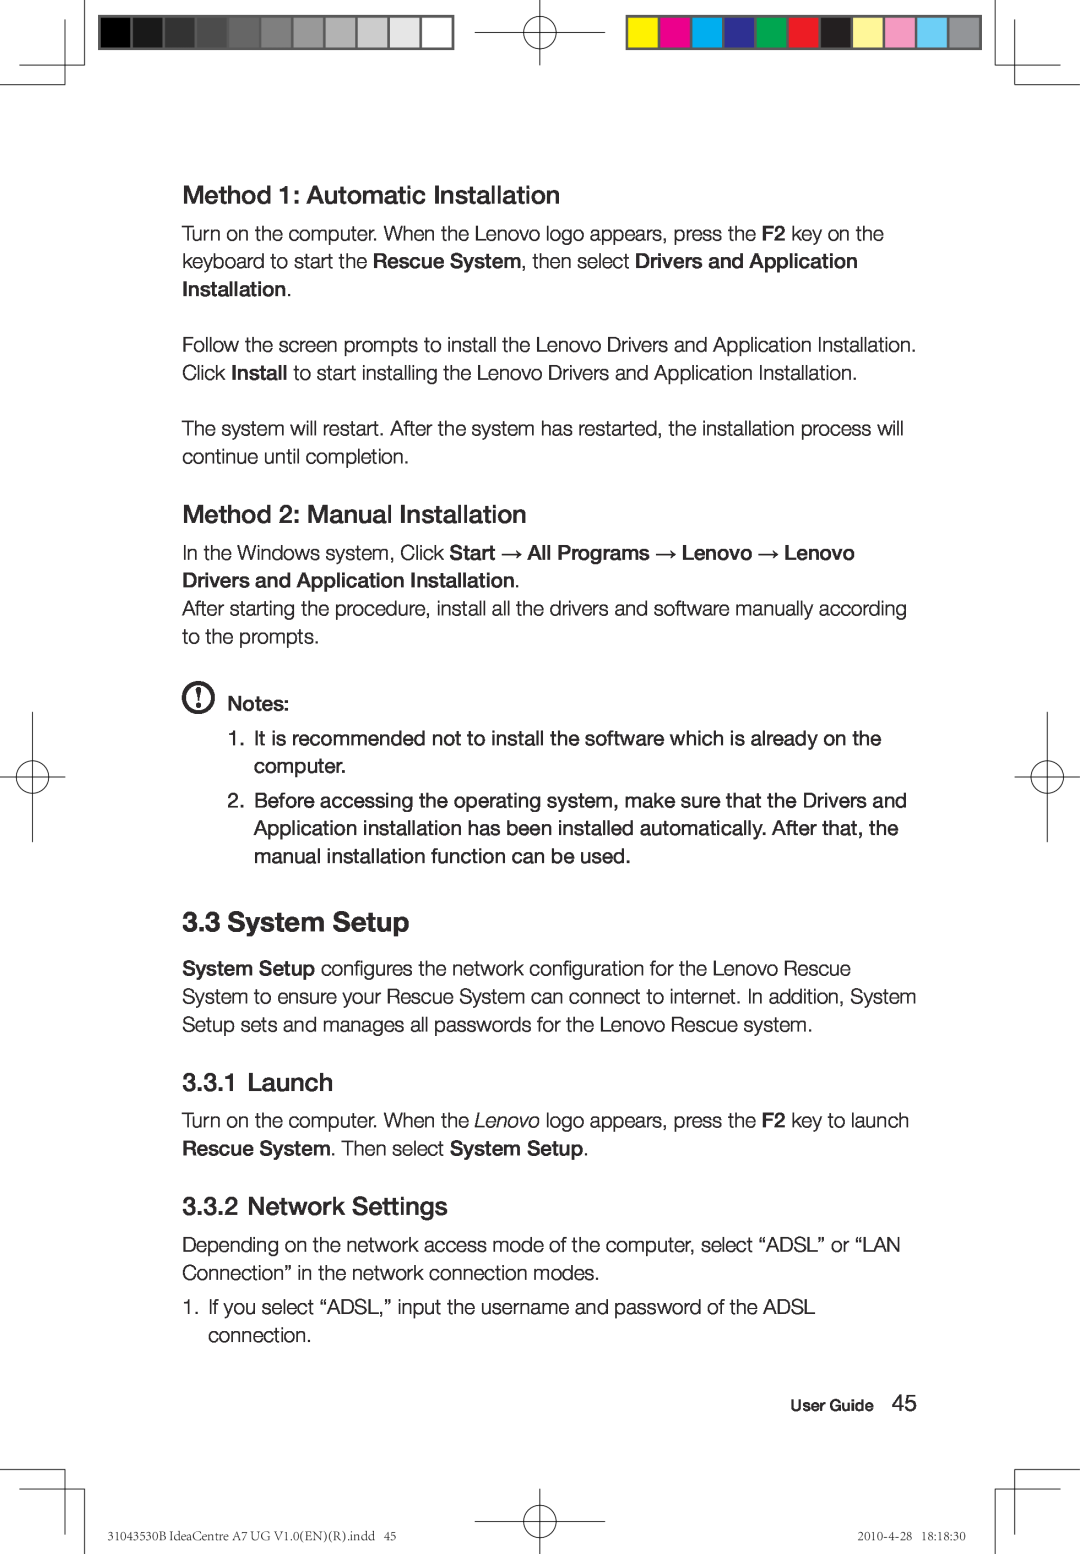 Lenovo A7 manual System Setup, Method 1 Automatic Installation, Method 2 Manual Installation, Launch, Network Settings 